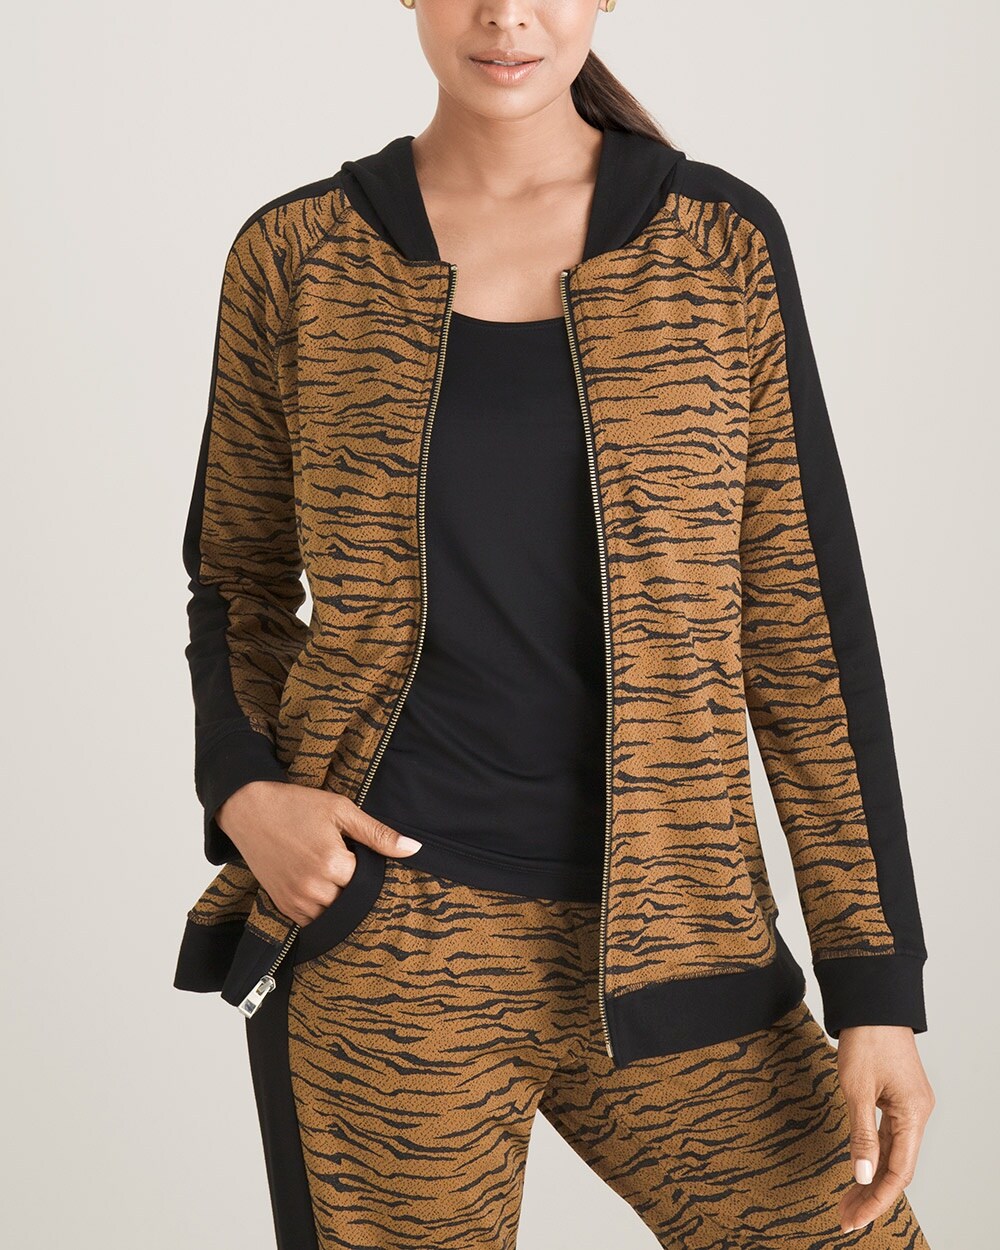 Zenergy Tiger-Print Jacquard Jacket